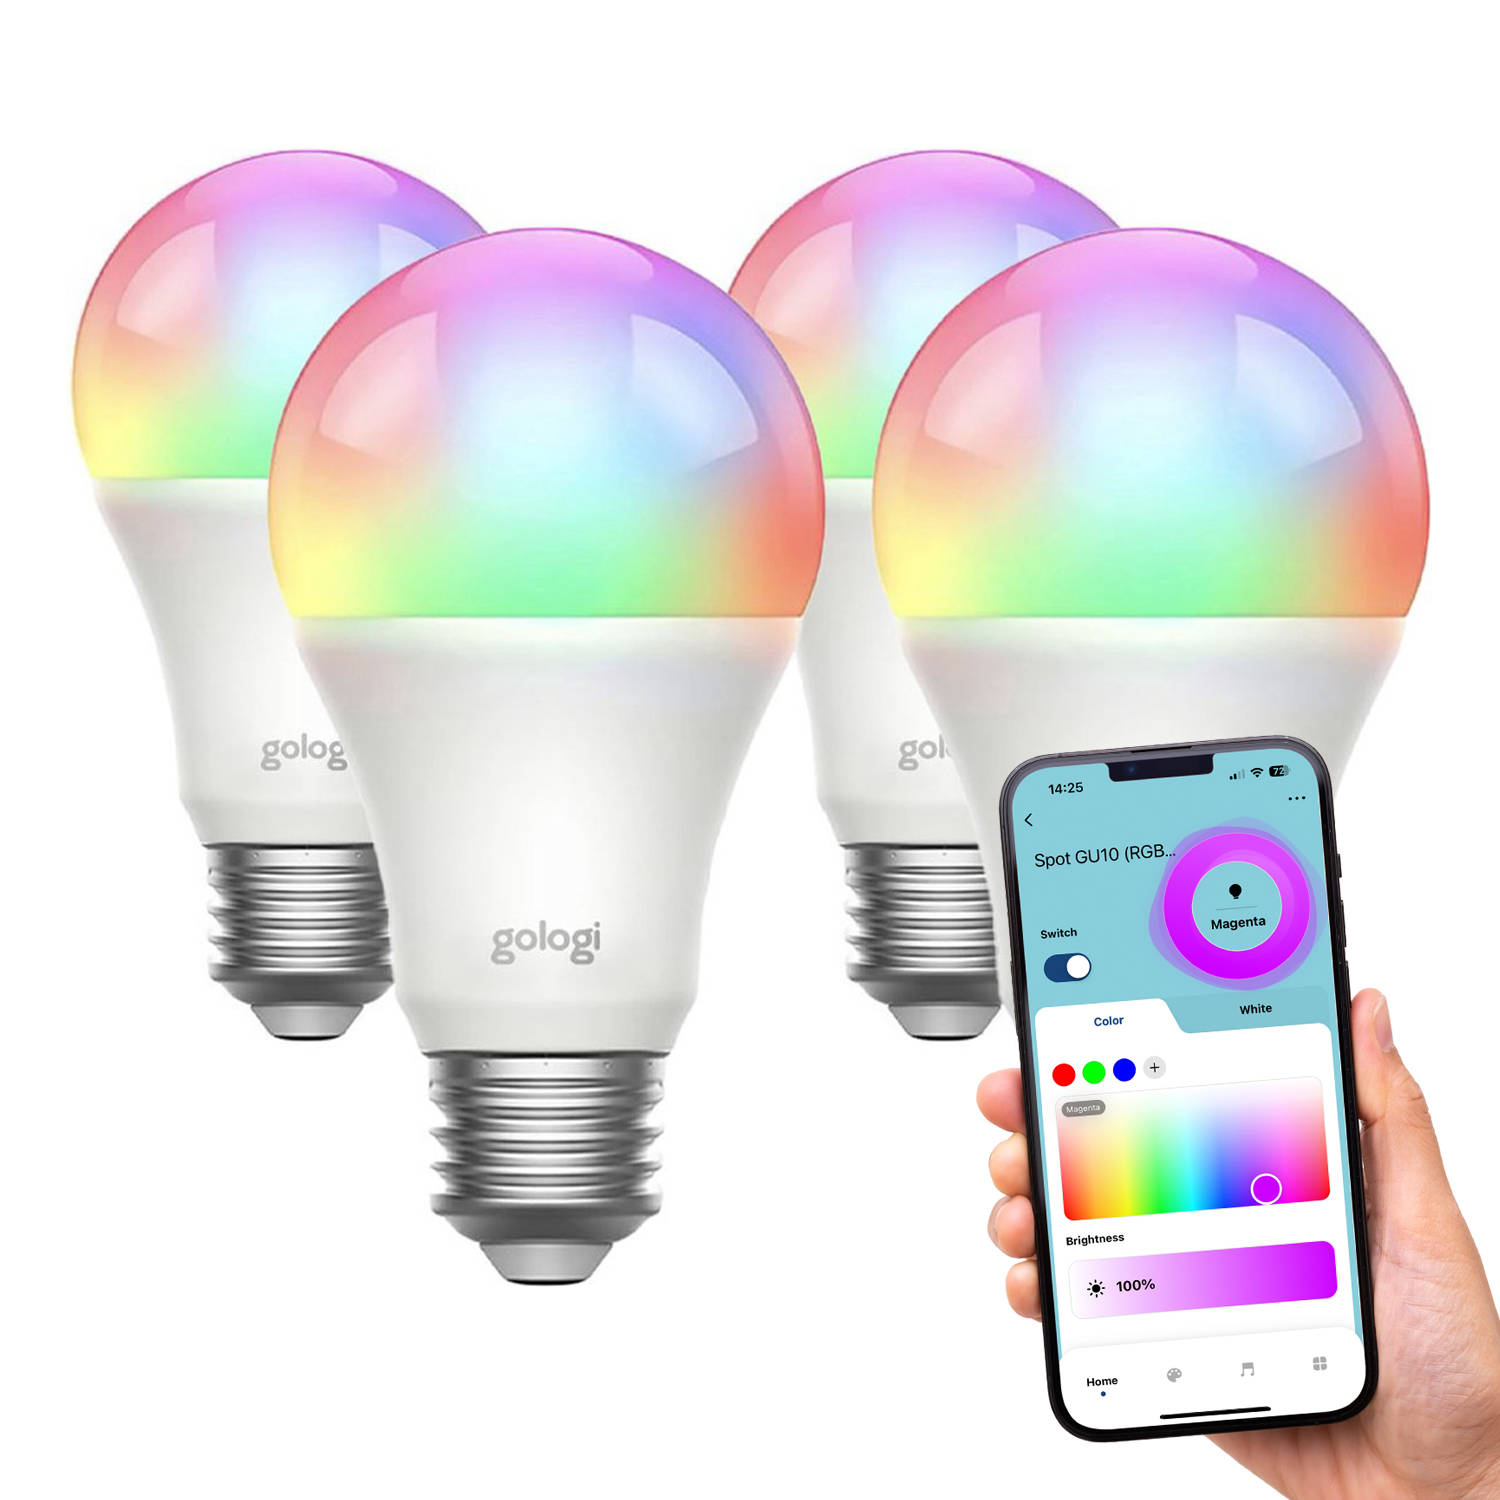 Gologi Slimme E27 Bulb Lamp - Smart WiFi - LED - Dimbaar - RGB - Mobiele App - Sfeerverlichting - 800 lumen - 4 stuks